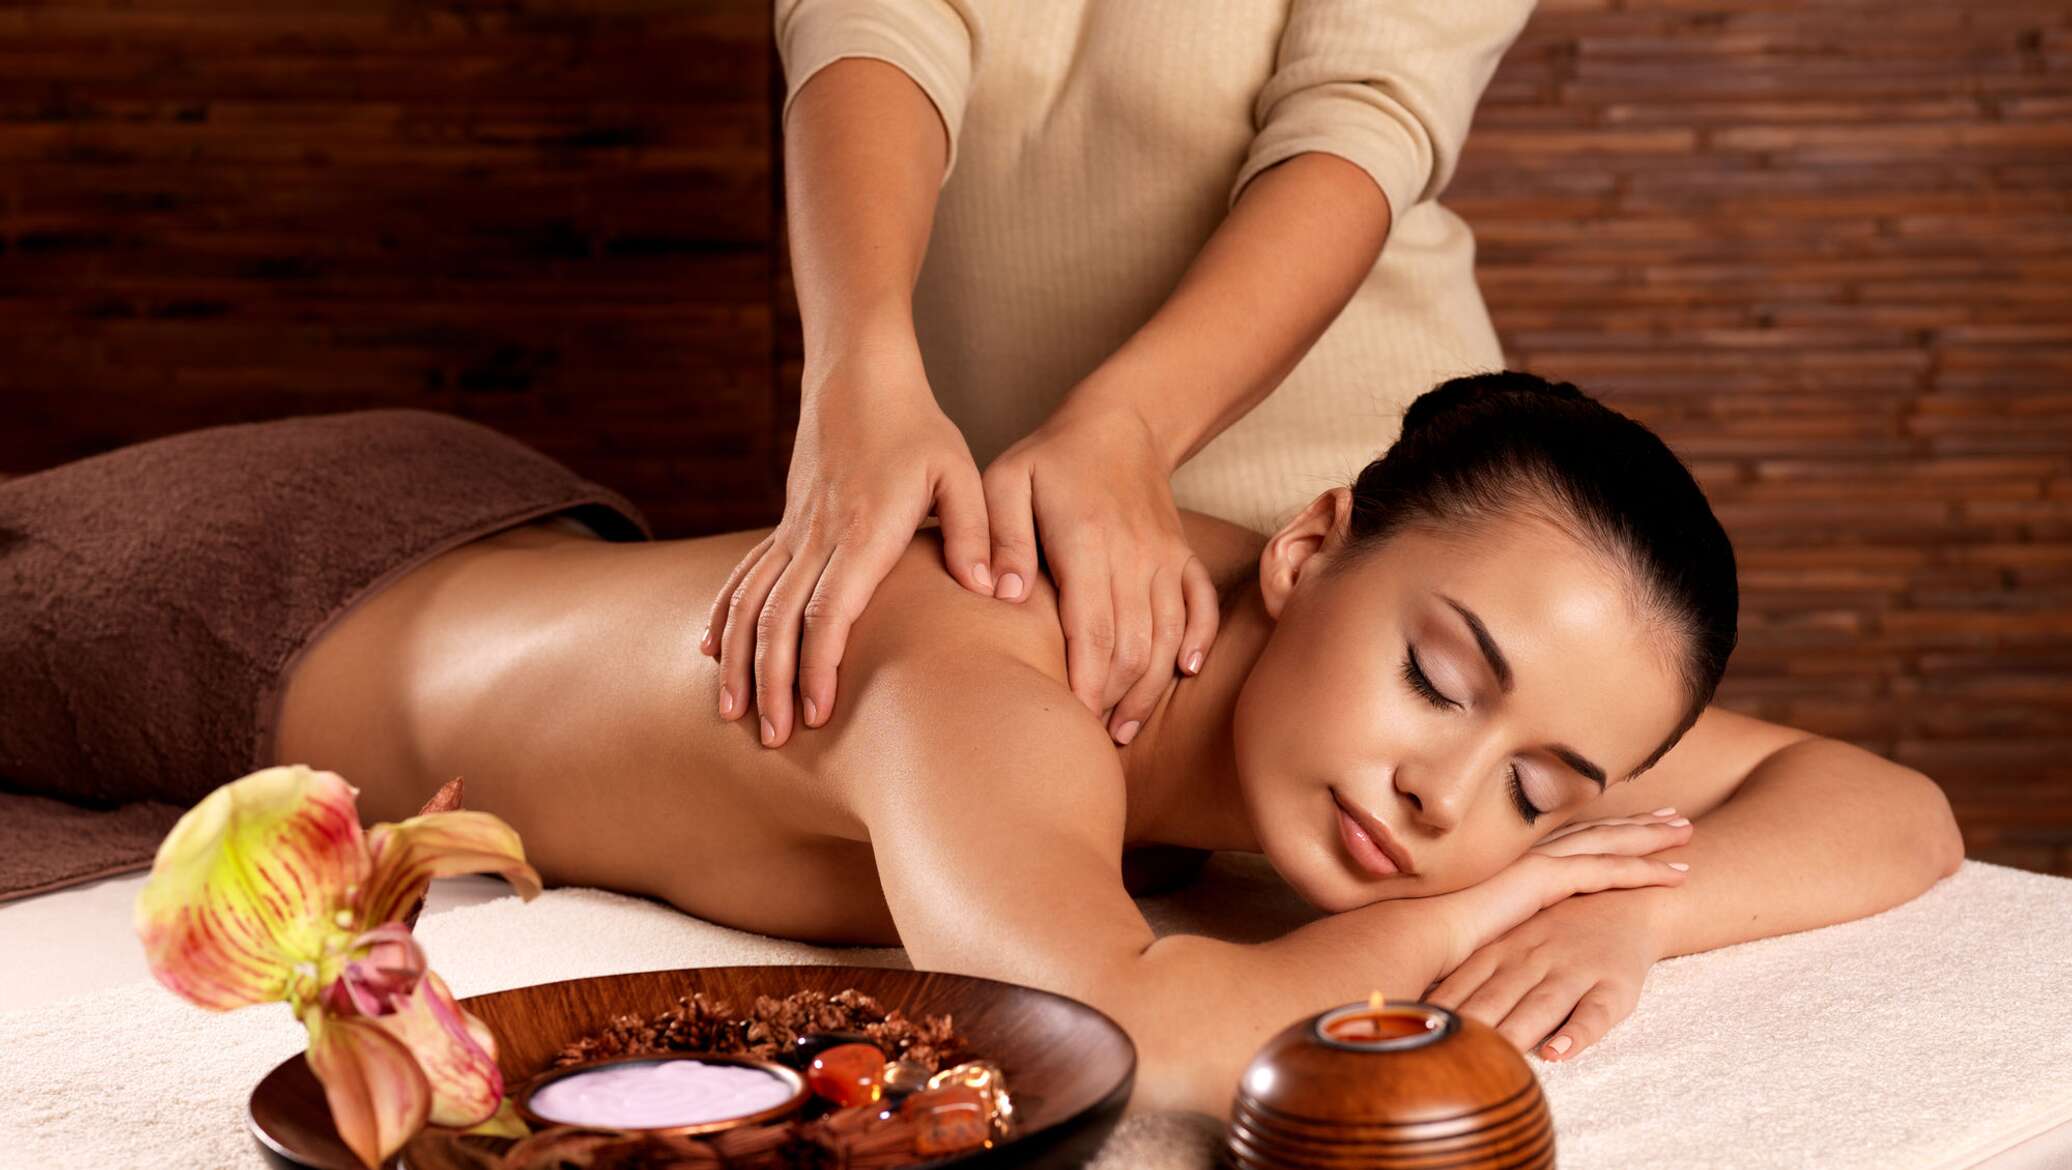 Massage o. Спа процедуры. Спа процедуры для тела. Спа процедуры для женщин. Массаж тела.